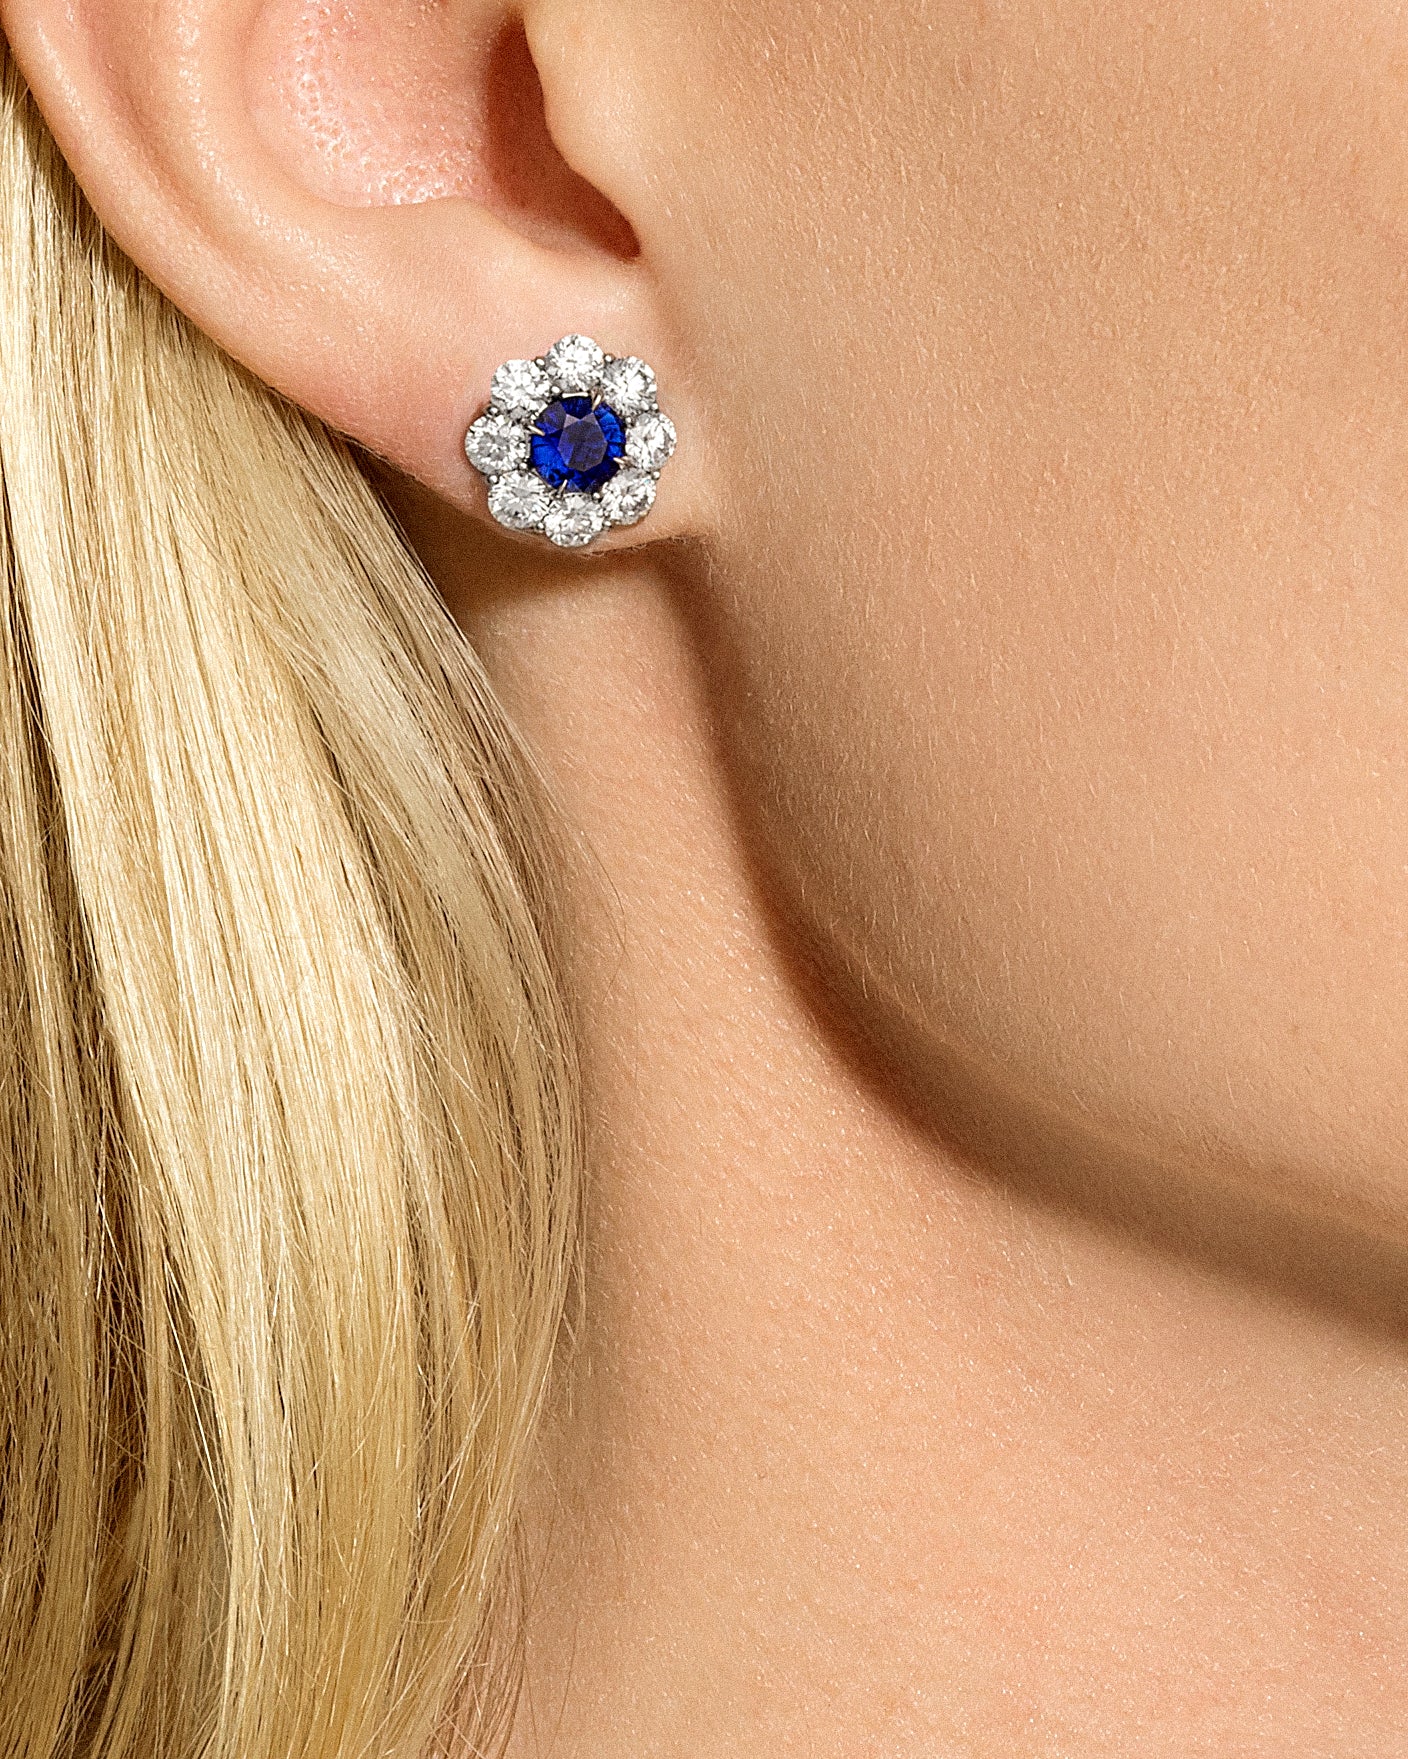 Royal Blue Sapphire & Diamond Stud Earrings